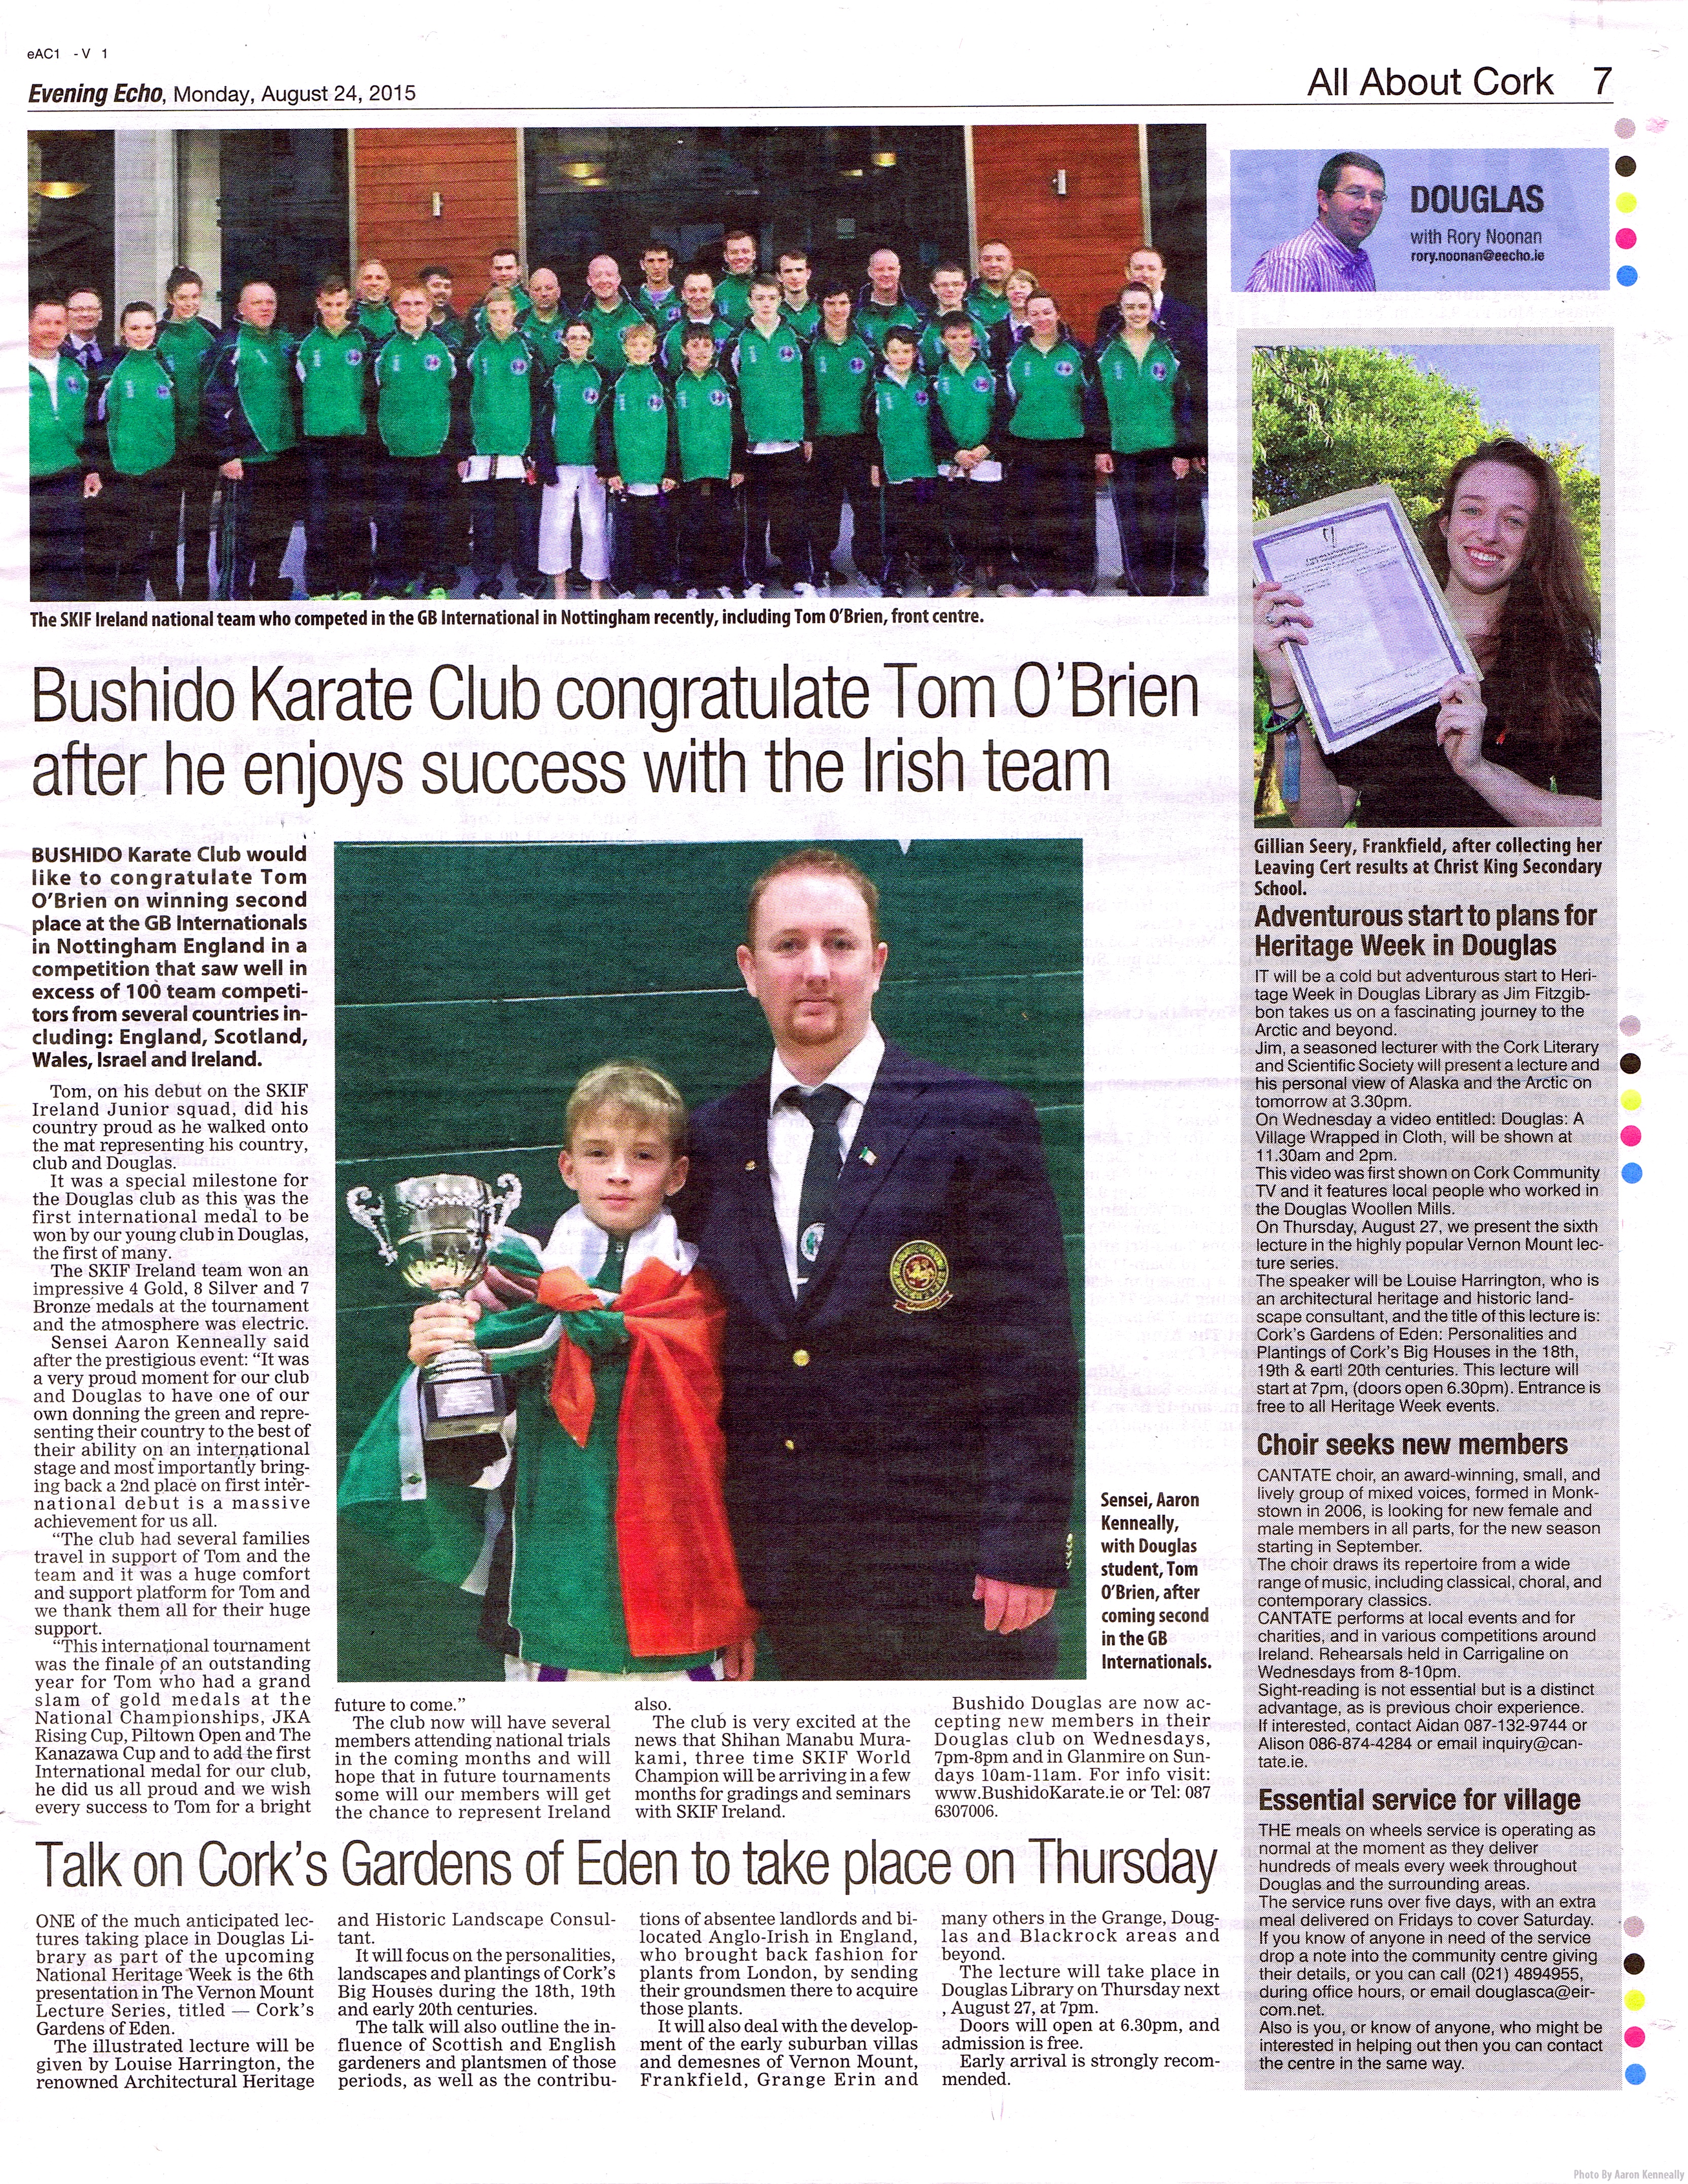 Evening Echo Feature - Bushido Karate Club congratulate Tom O'Brien after he enjoys success witht the Irish Team